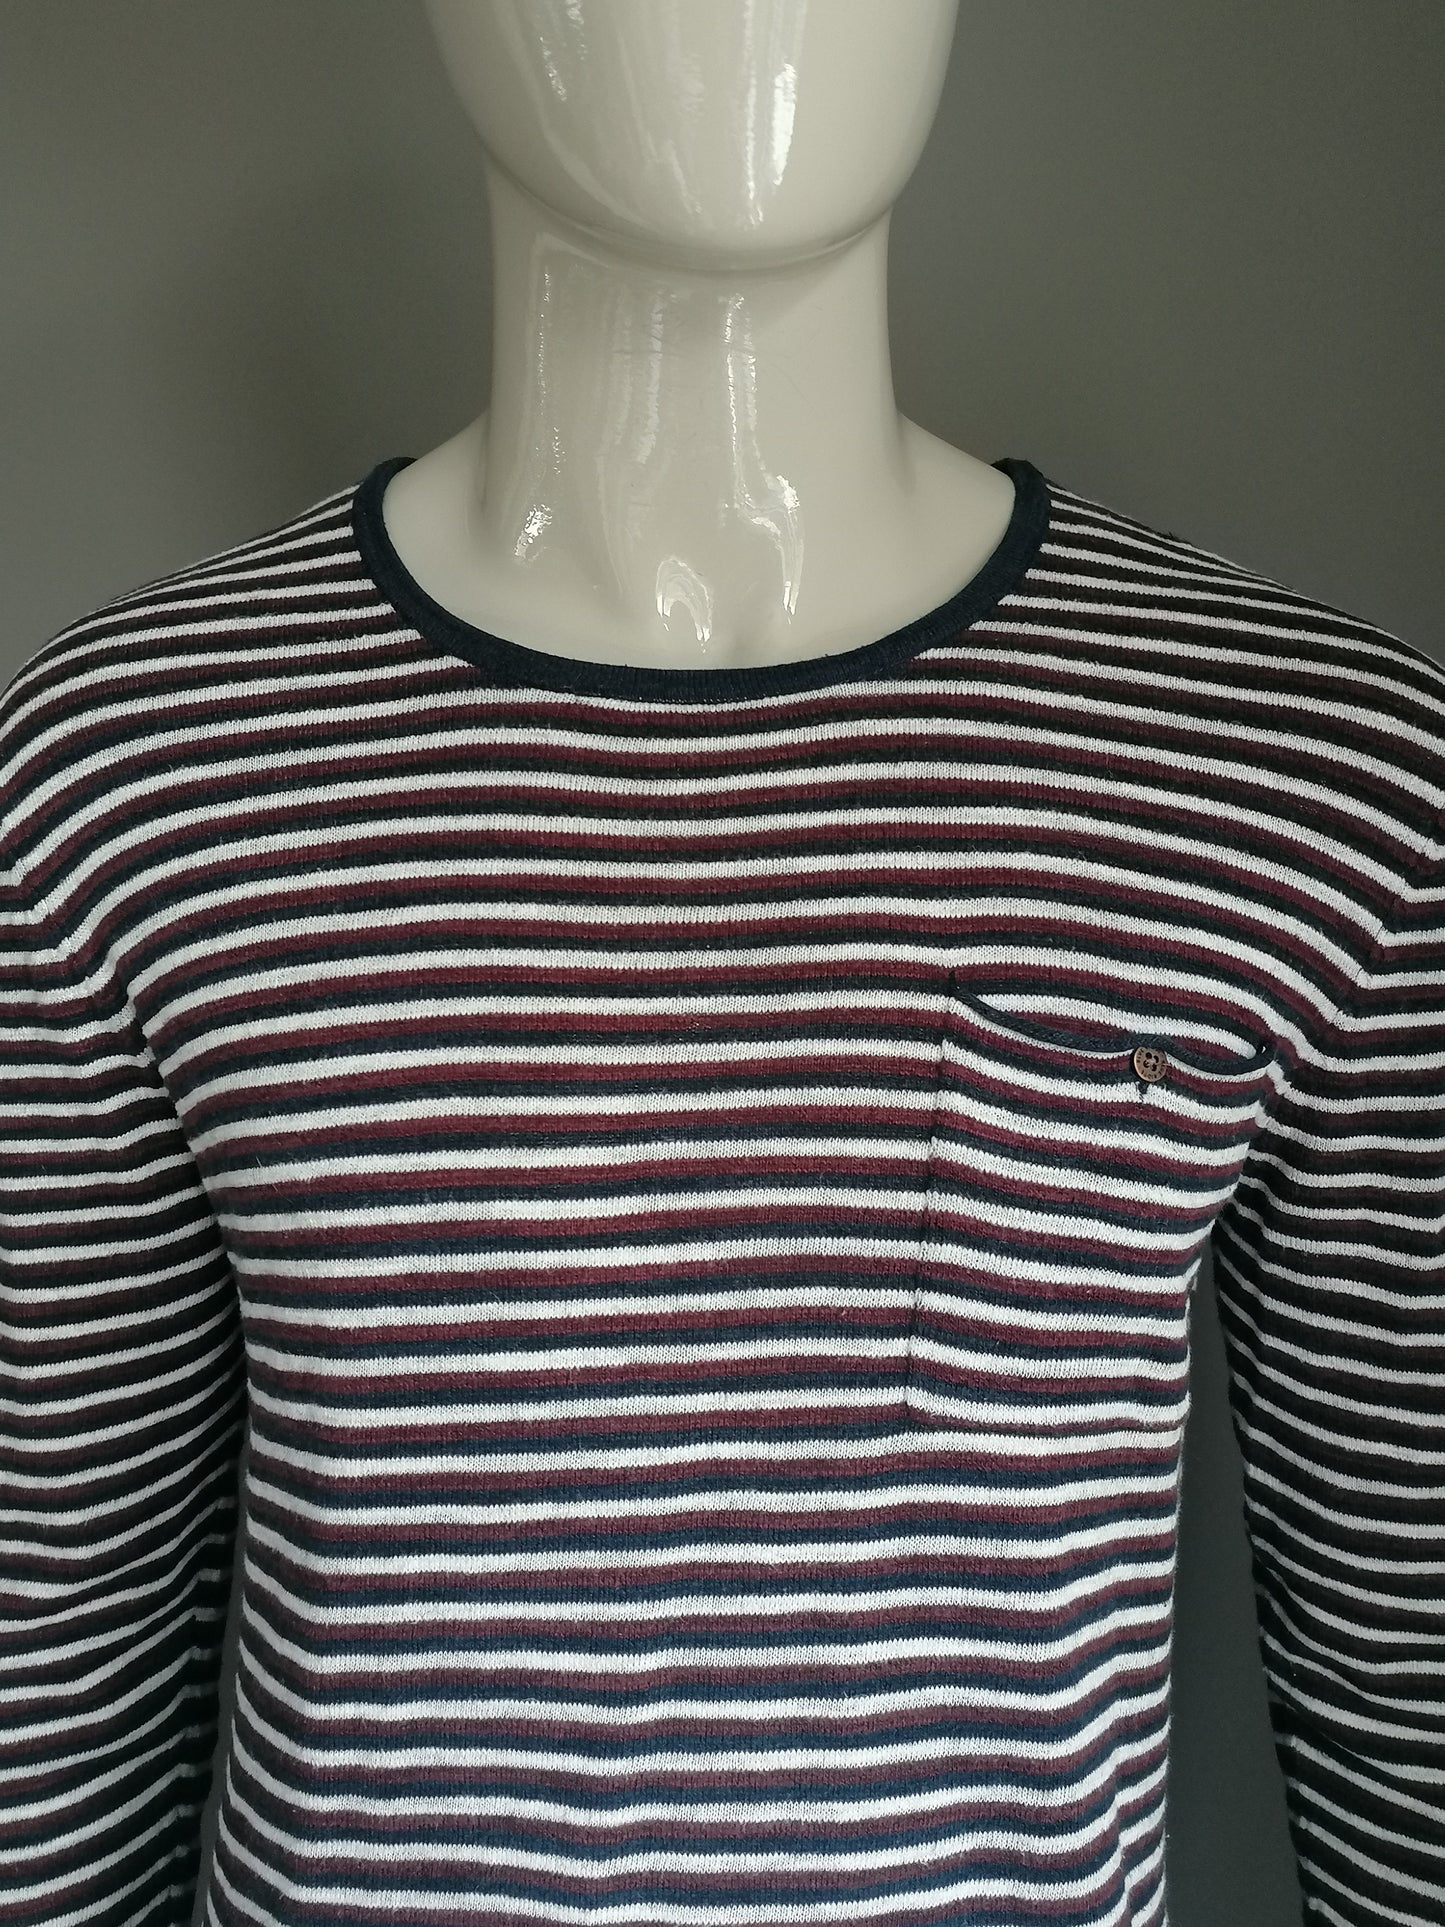 Blue ridge thin sweater. Brown blue white striped. Size L.